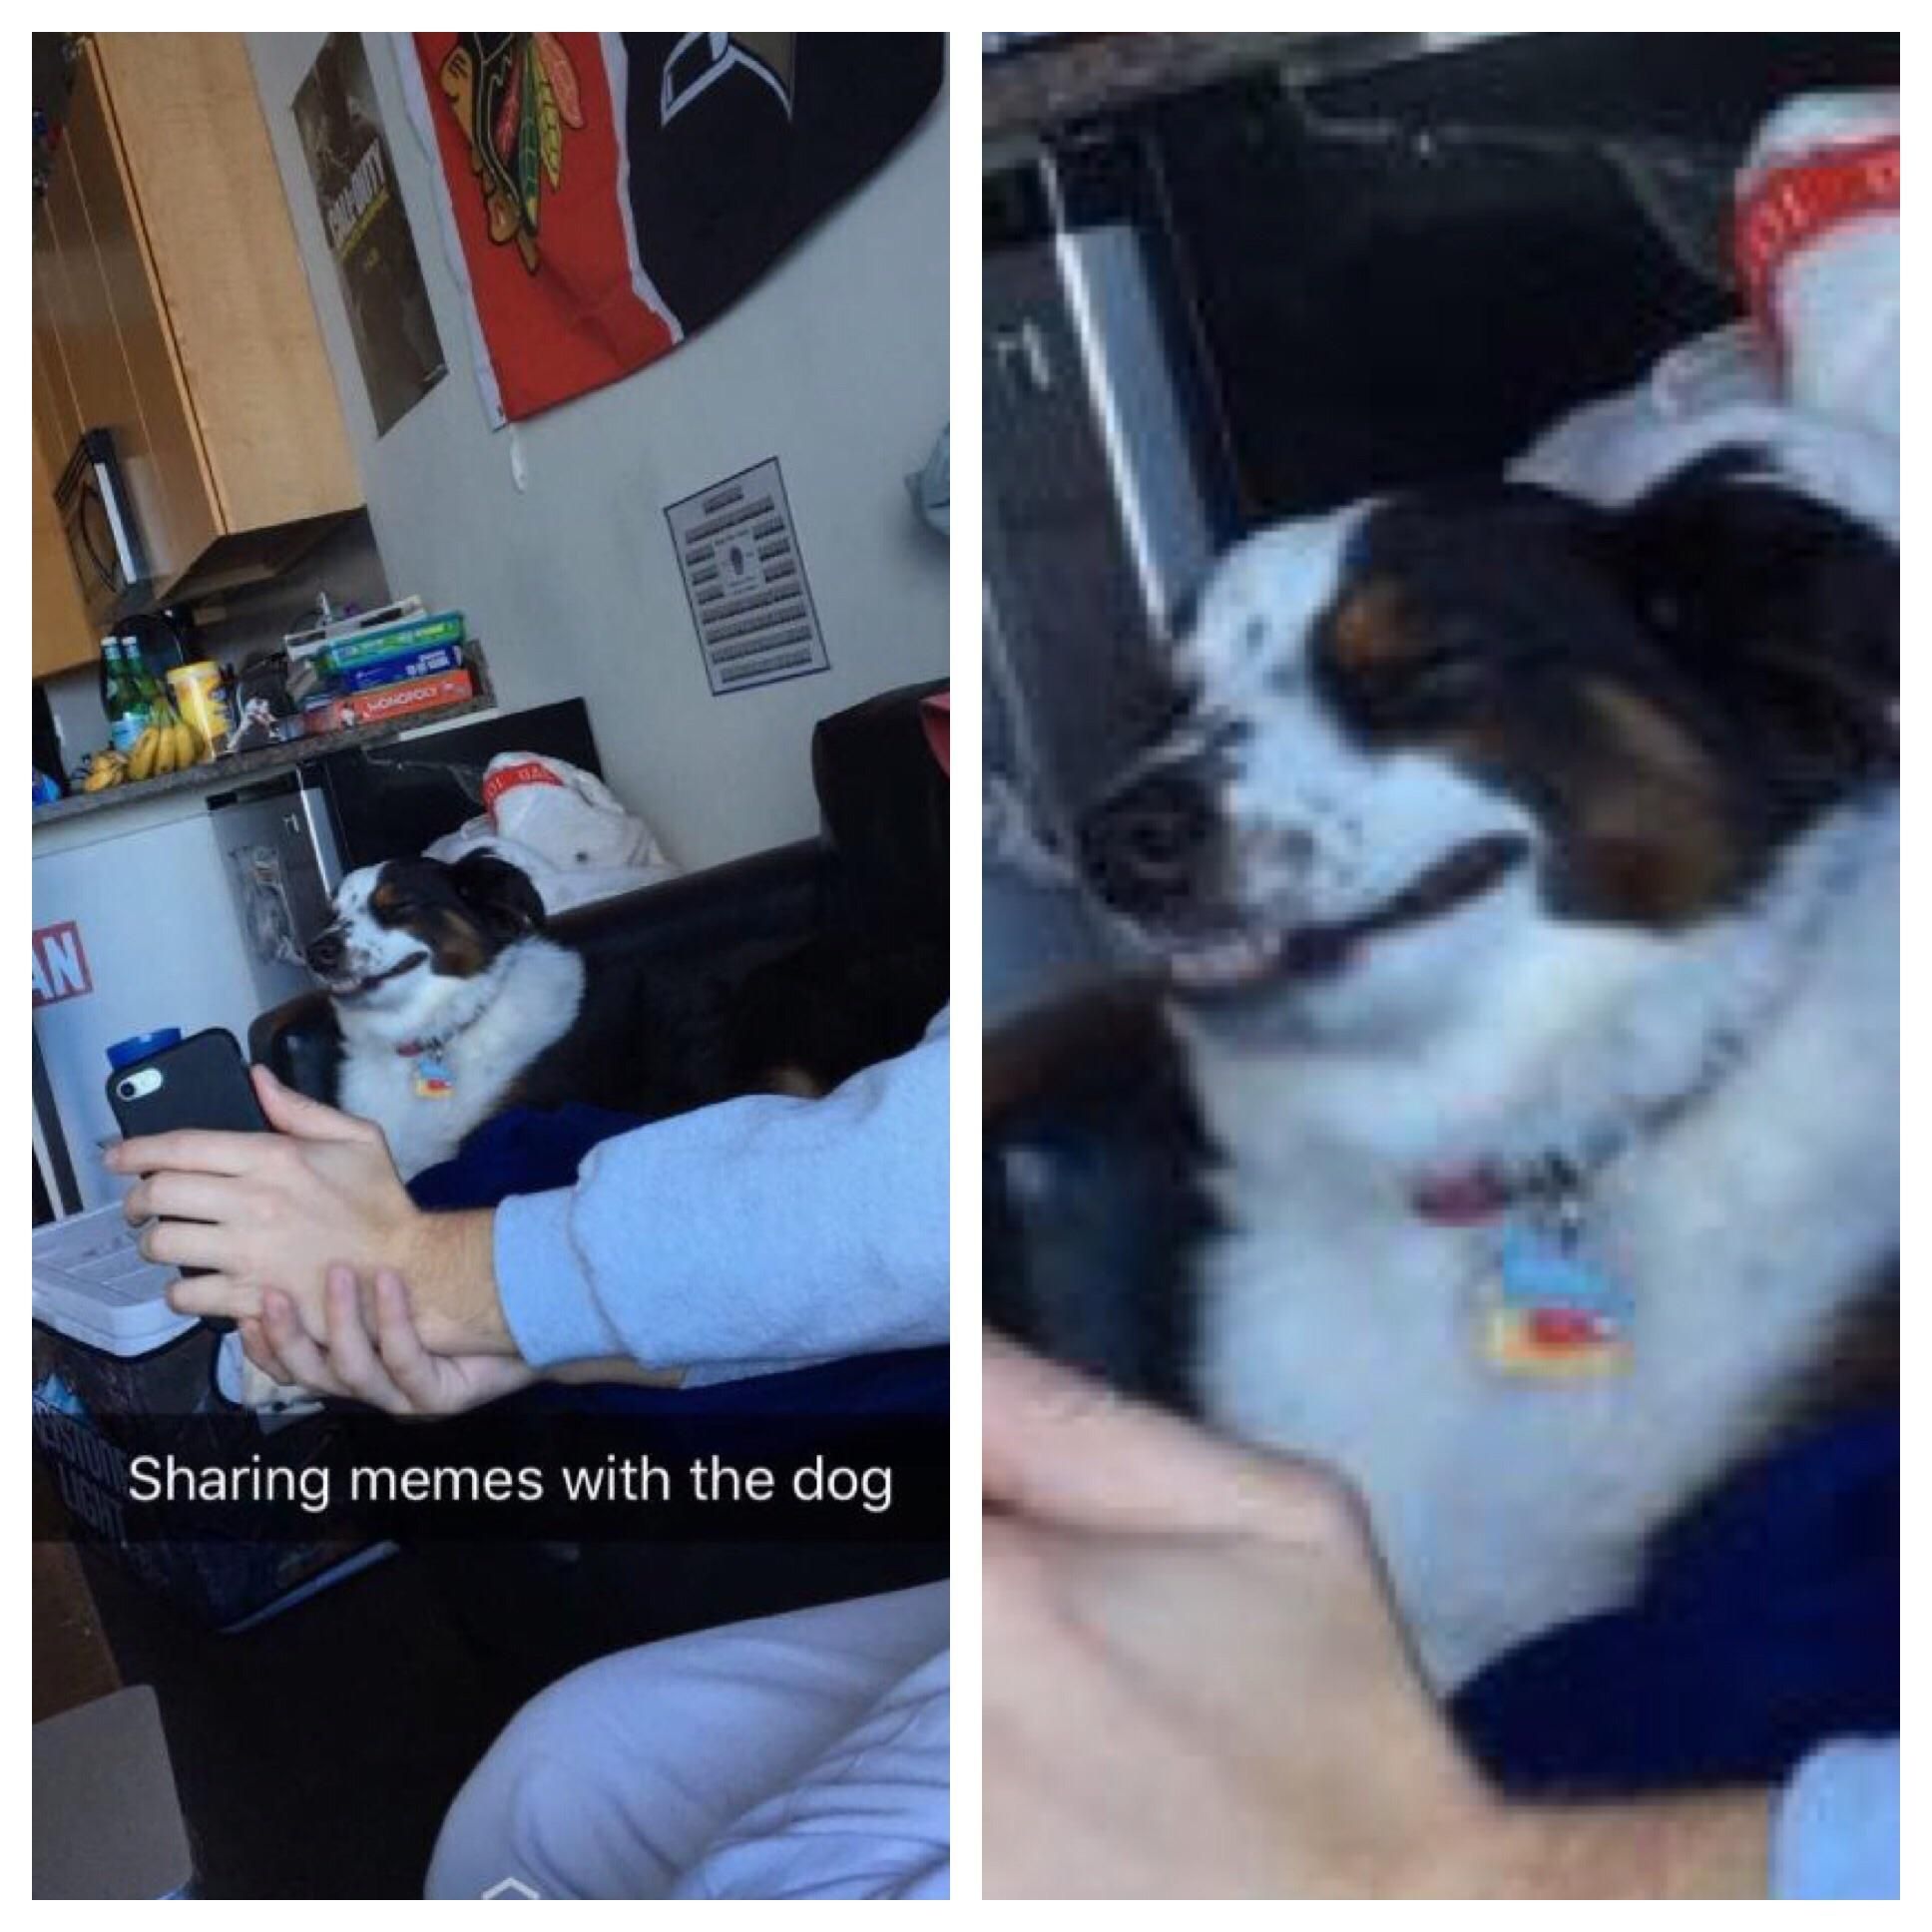 Doge appreciating some dank memes